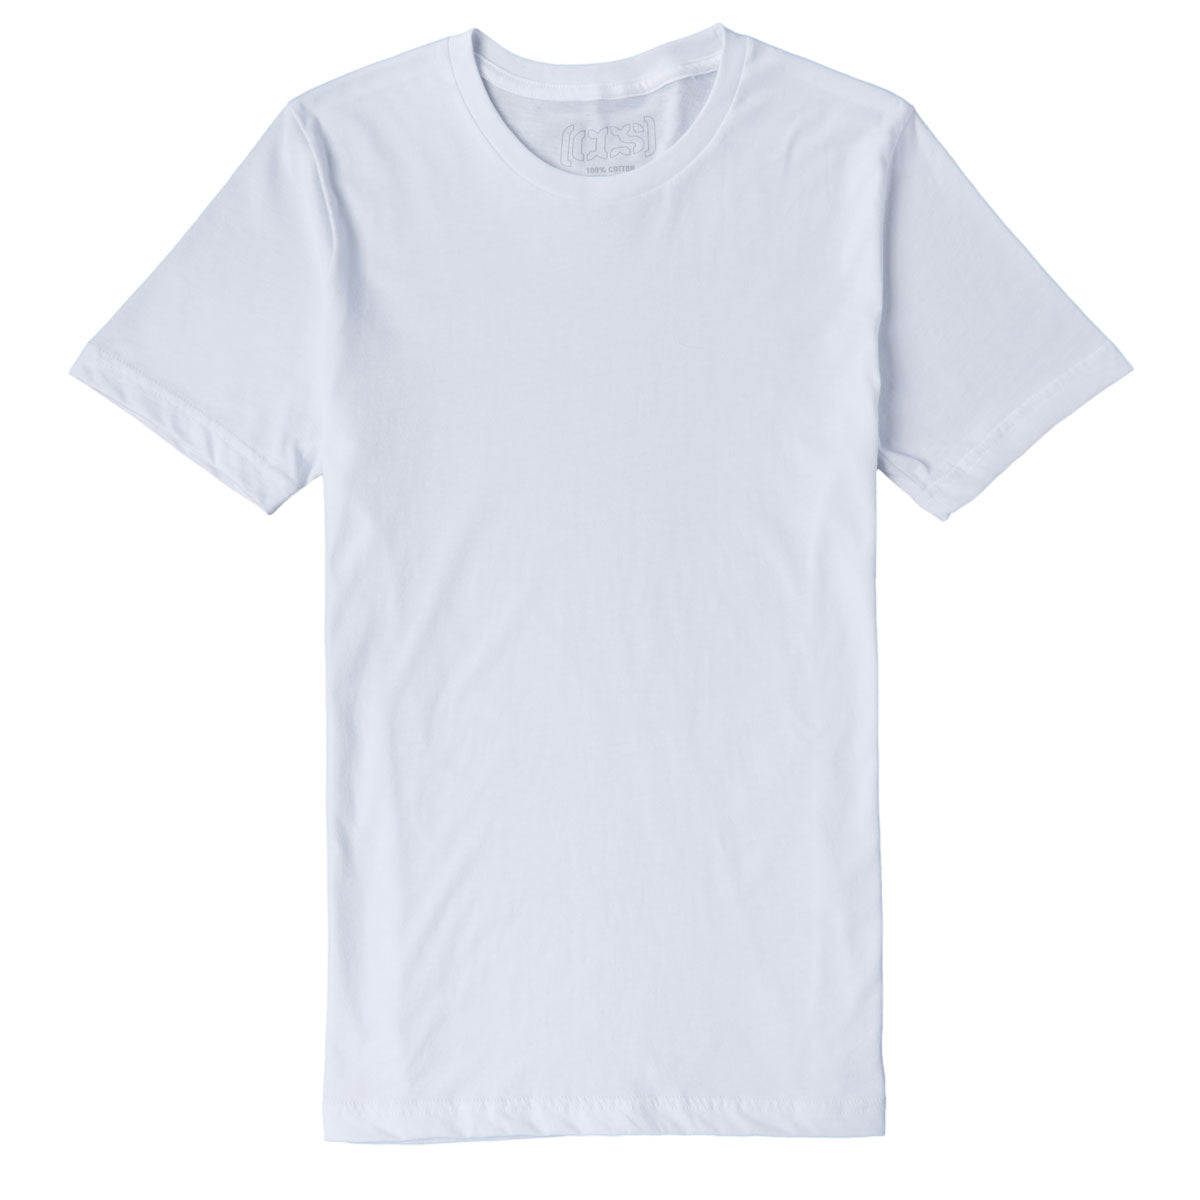 CCS Basis T-Shirt - White image 1